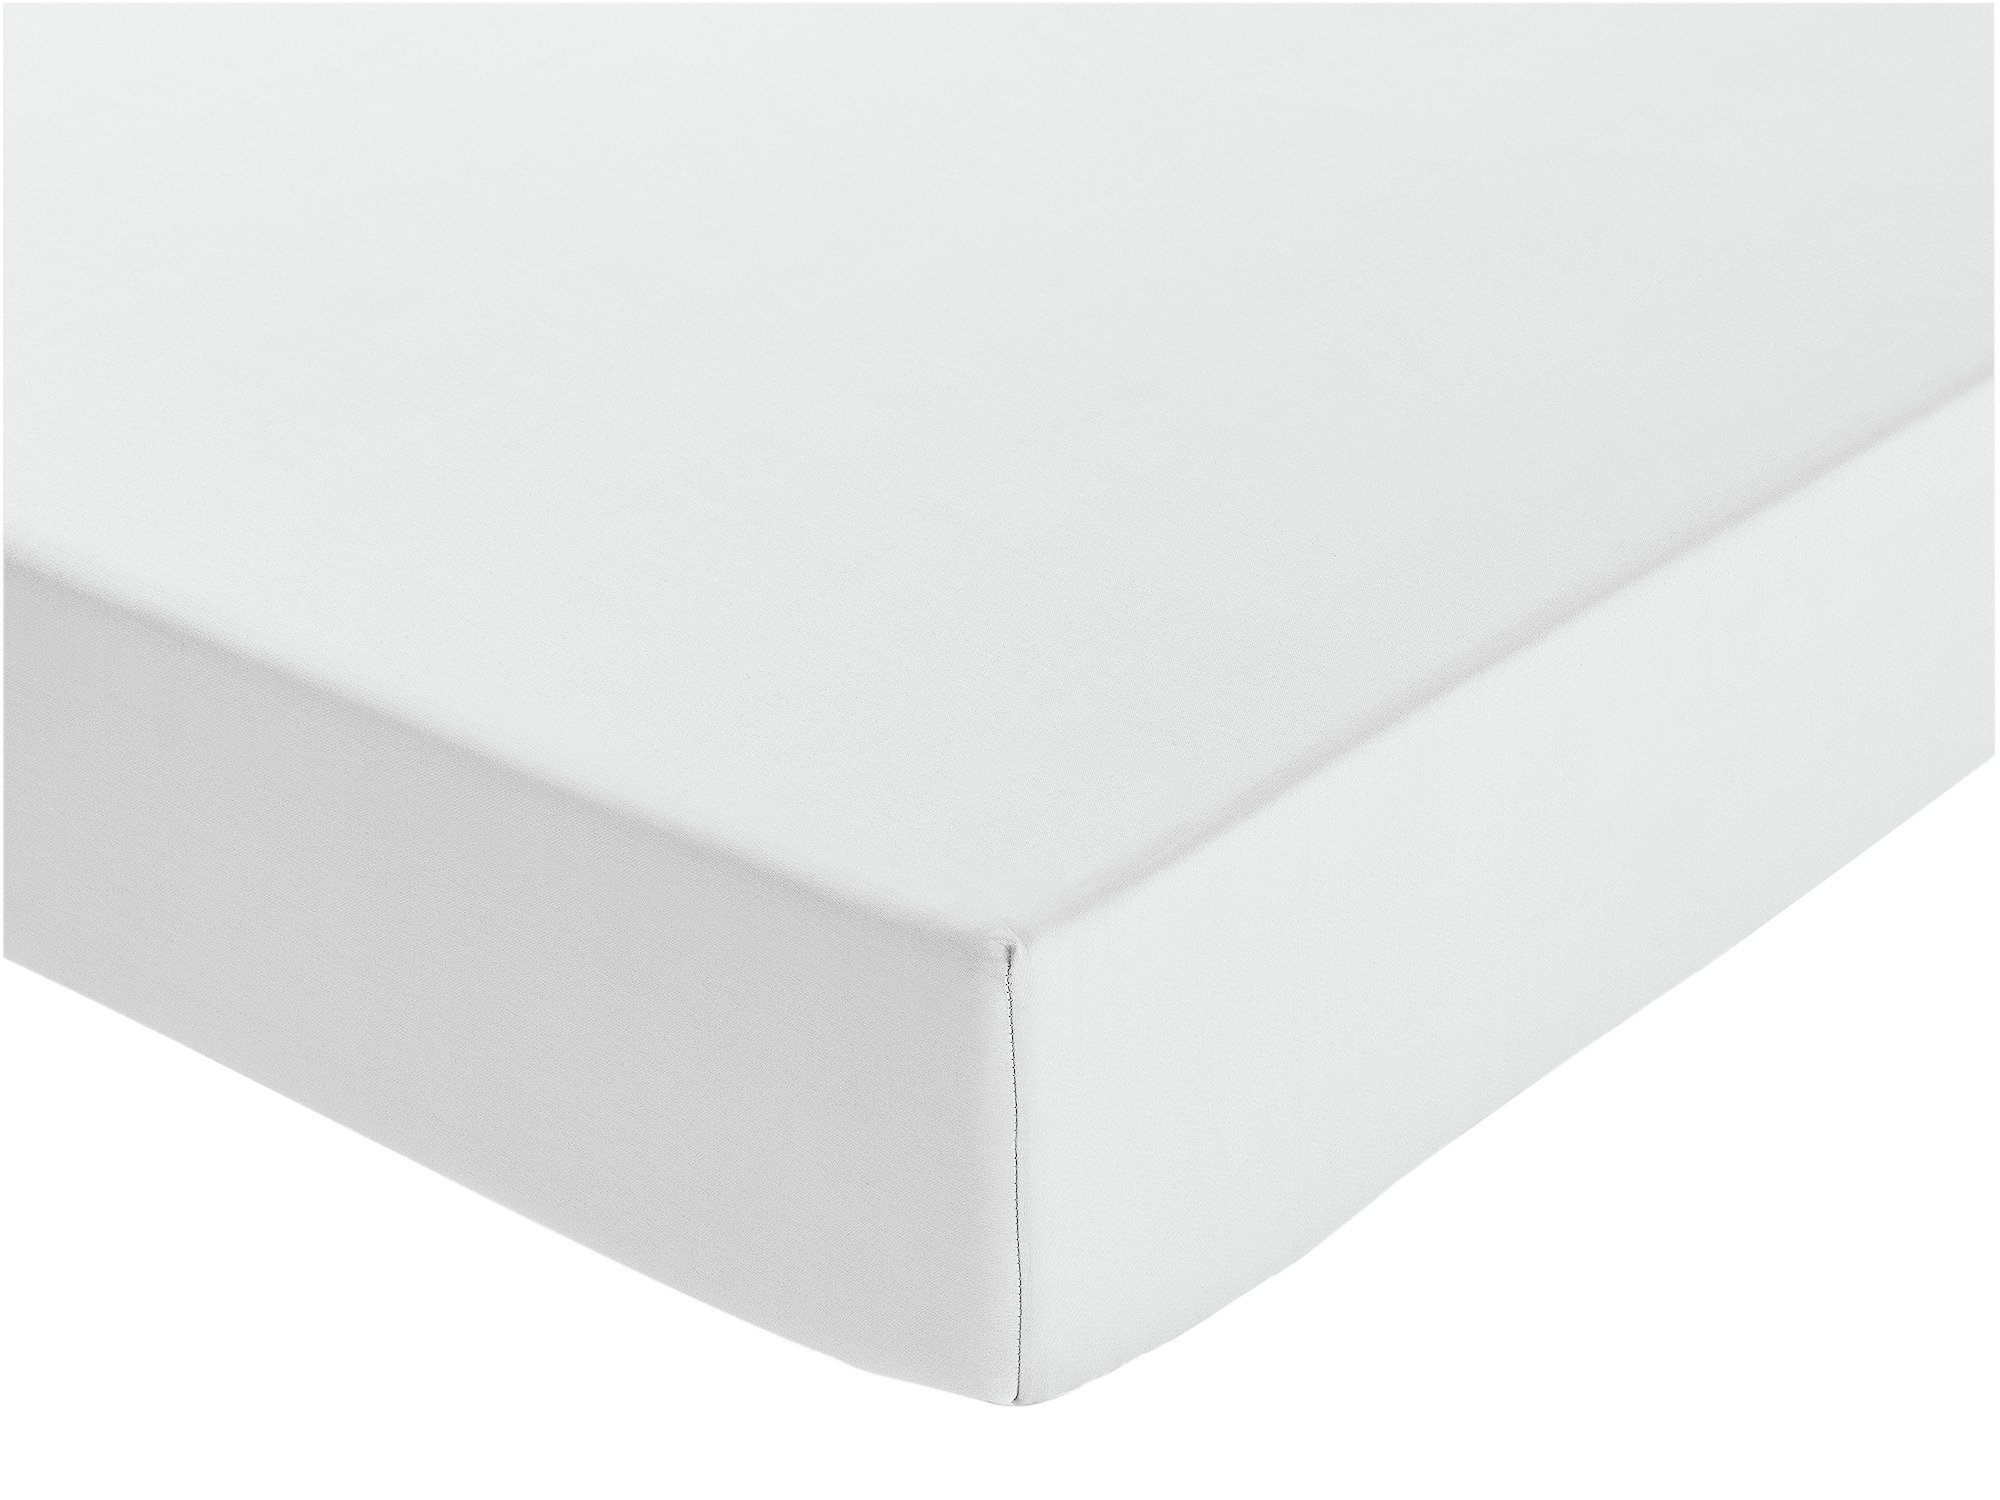 Argos Home 100% Cotton White Ex Deep Ftd Sheet - Superking